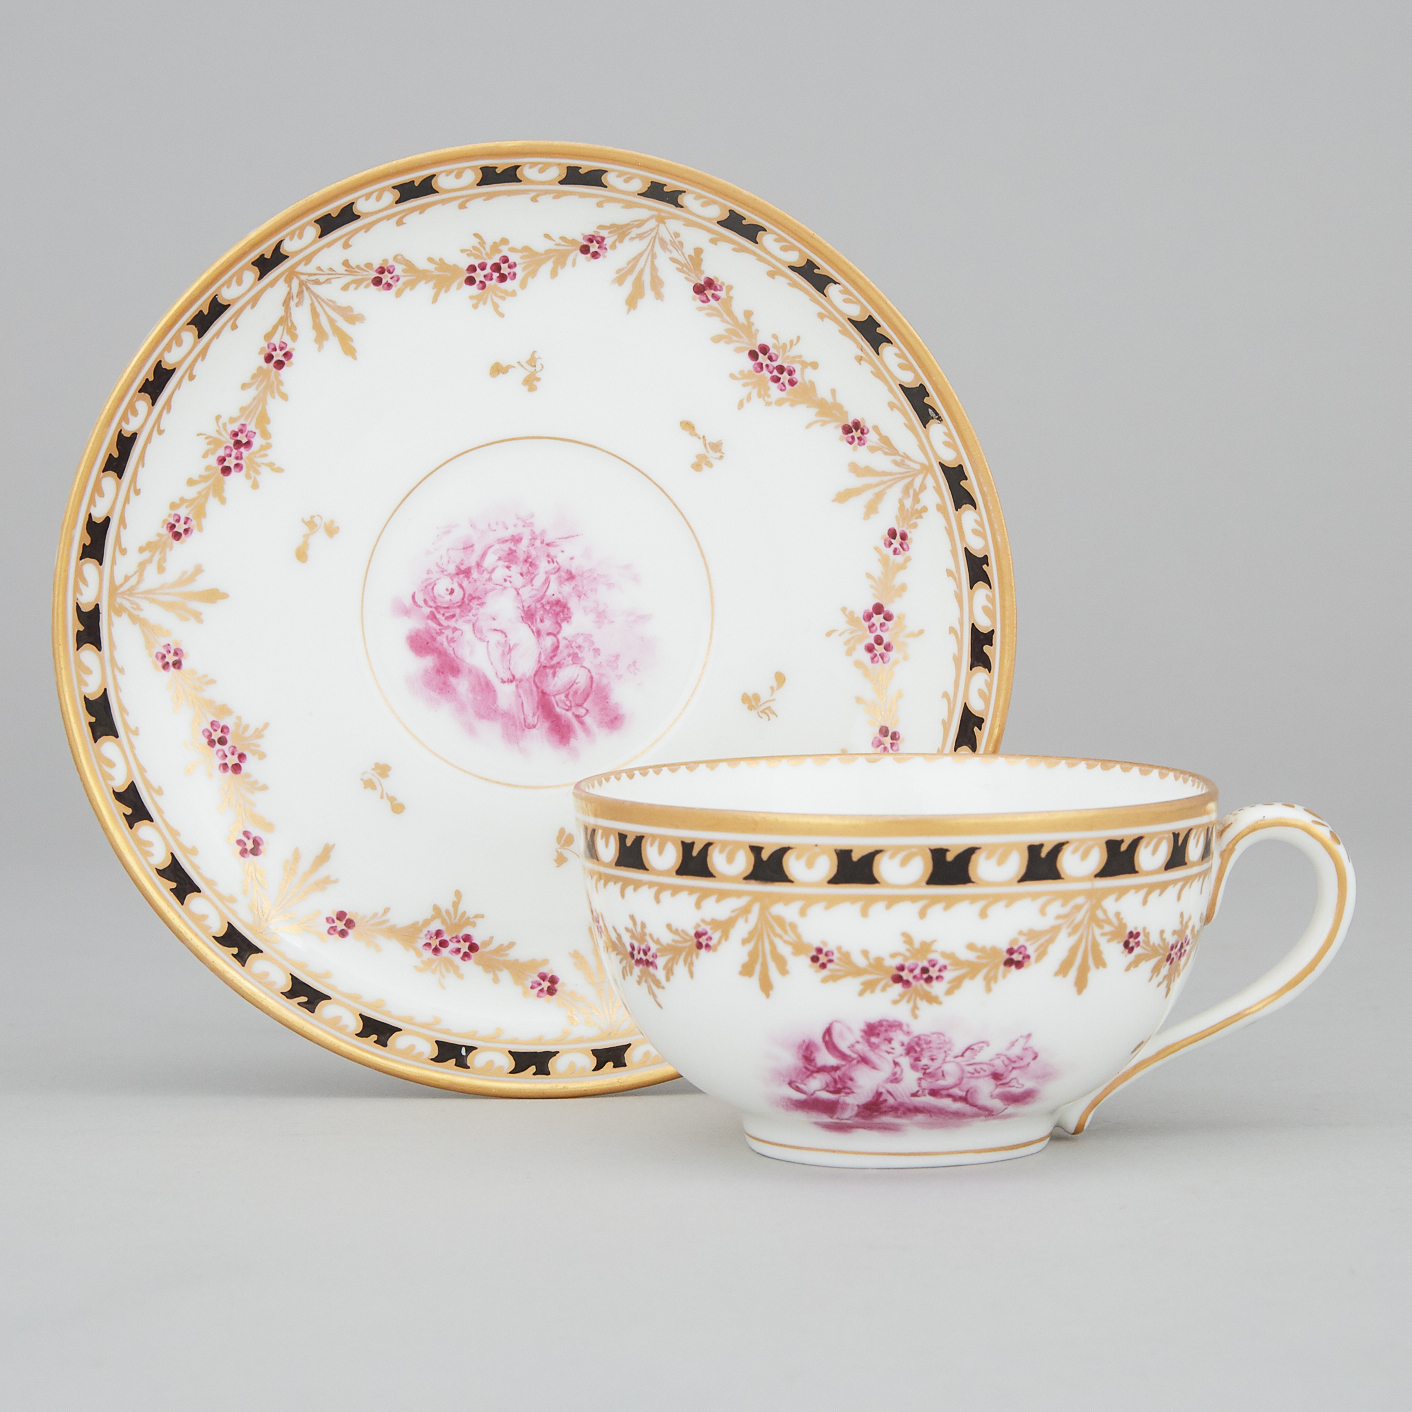 Nyon Cup and Saucer, c.1781-1813